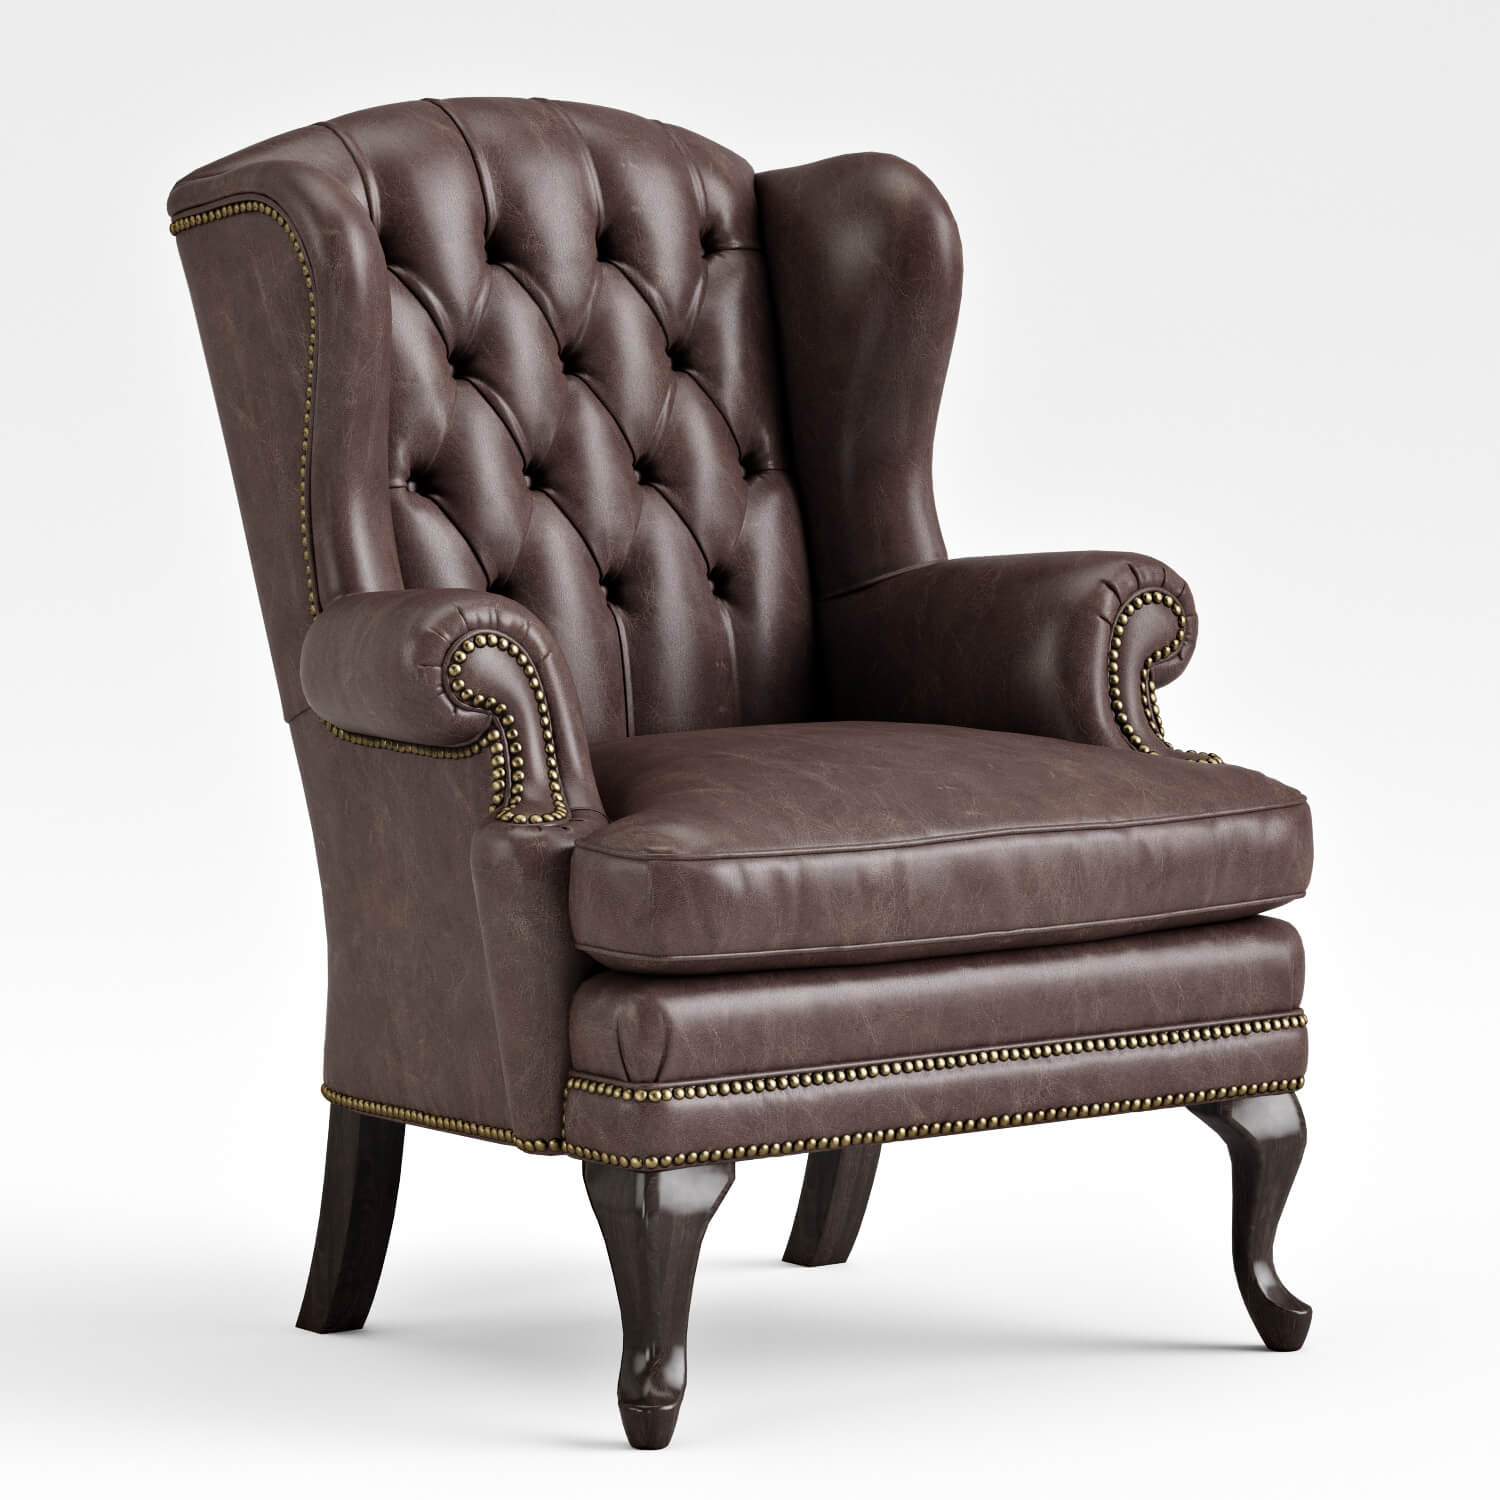 Galimberti Nino Sinatra armchair 85 - Download the 3D Model (22700 ...